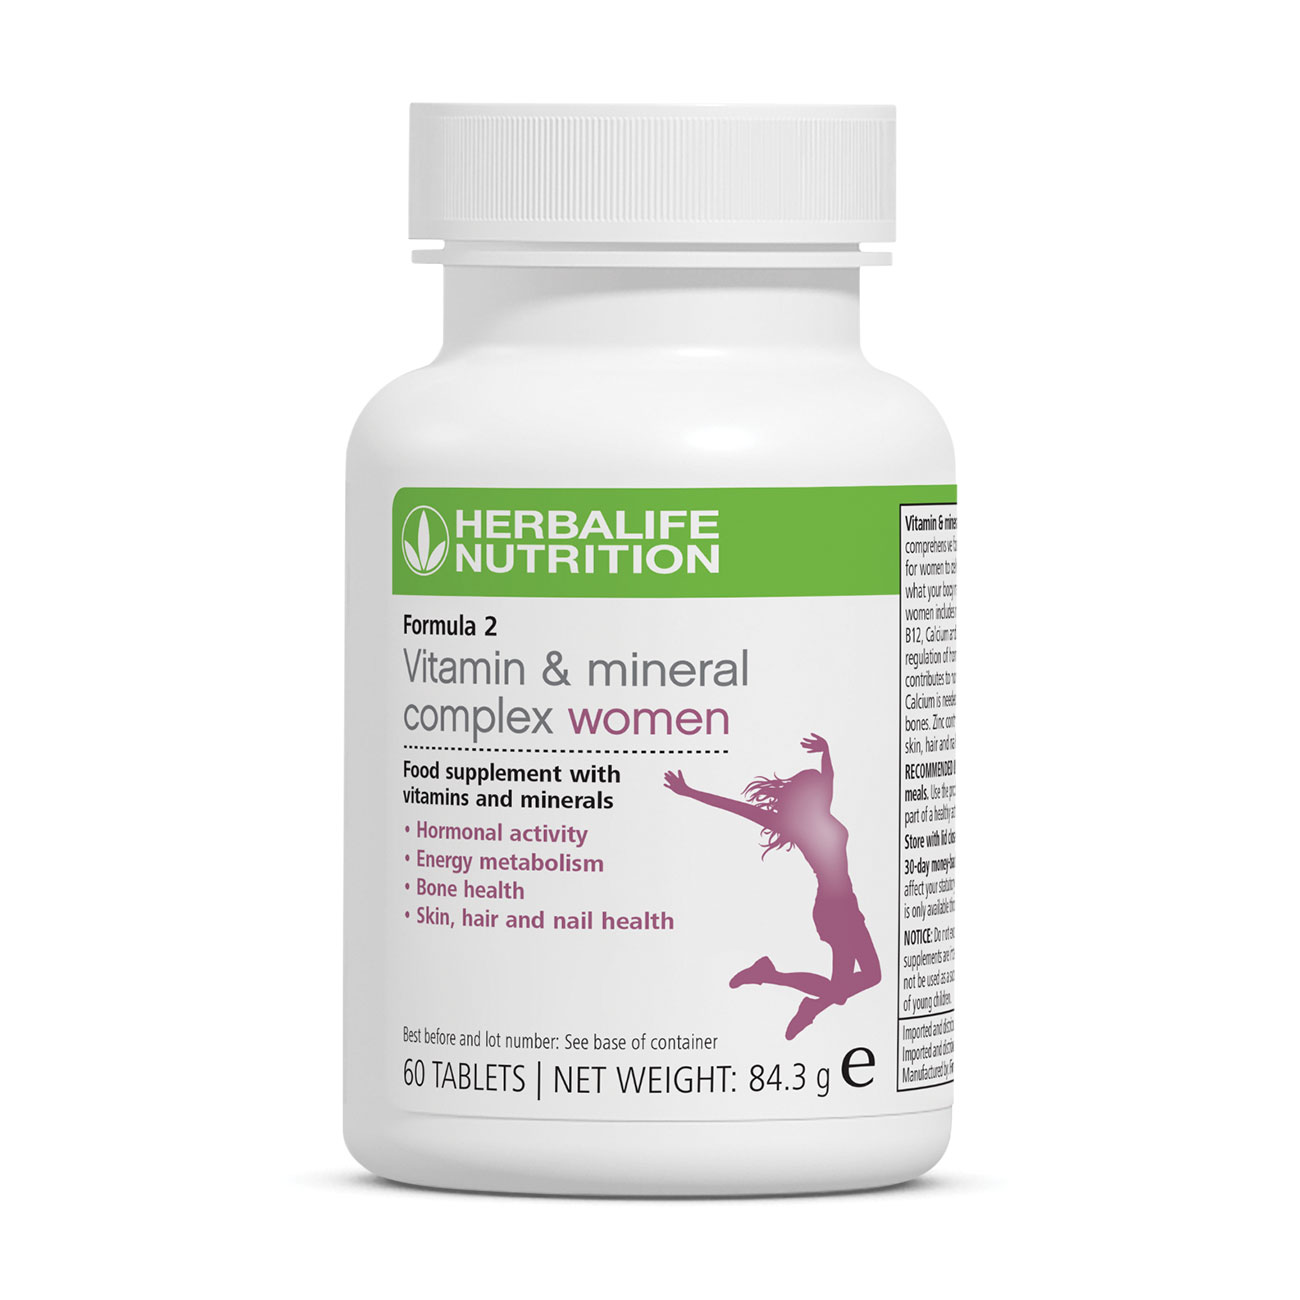 Formula 2 Vitamin & Mineral Complex Women Multivitamin Supplement product shot